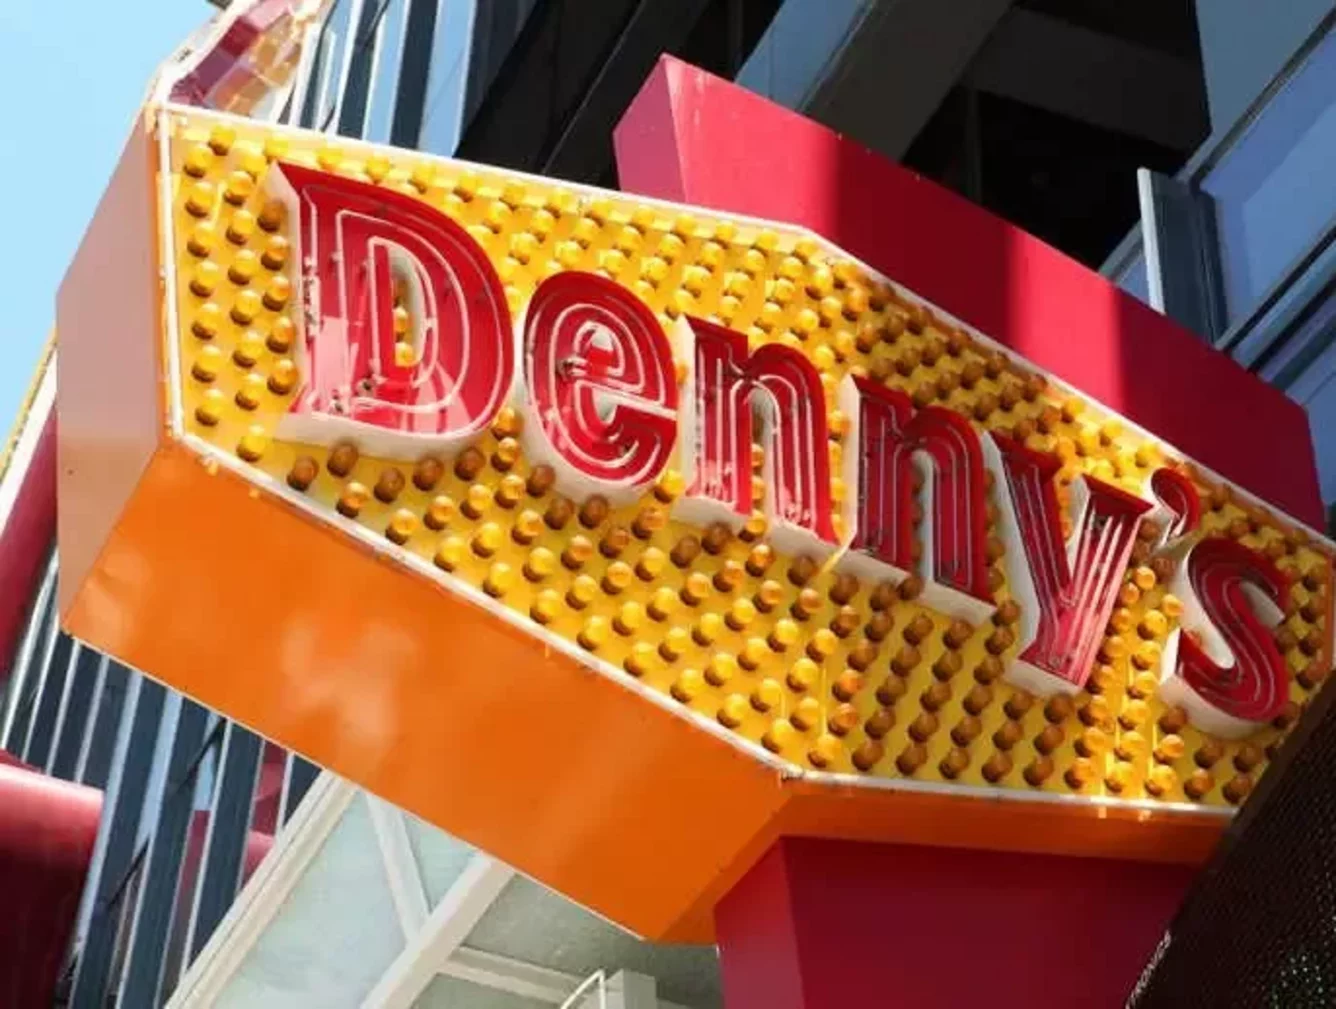 Denny's - I-Drive South